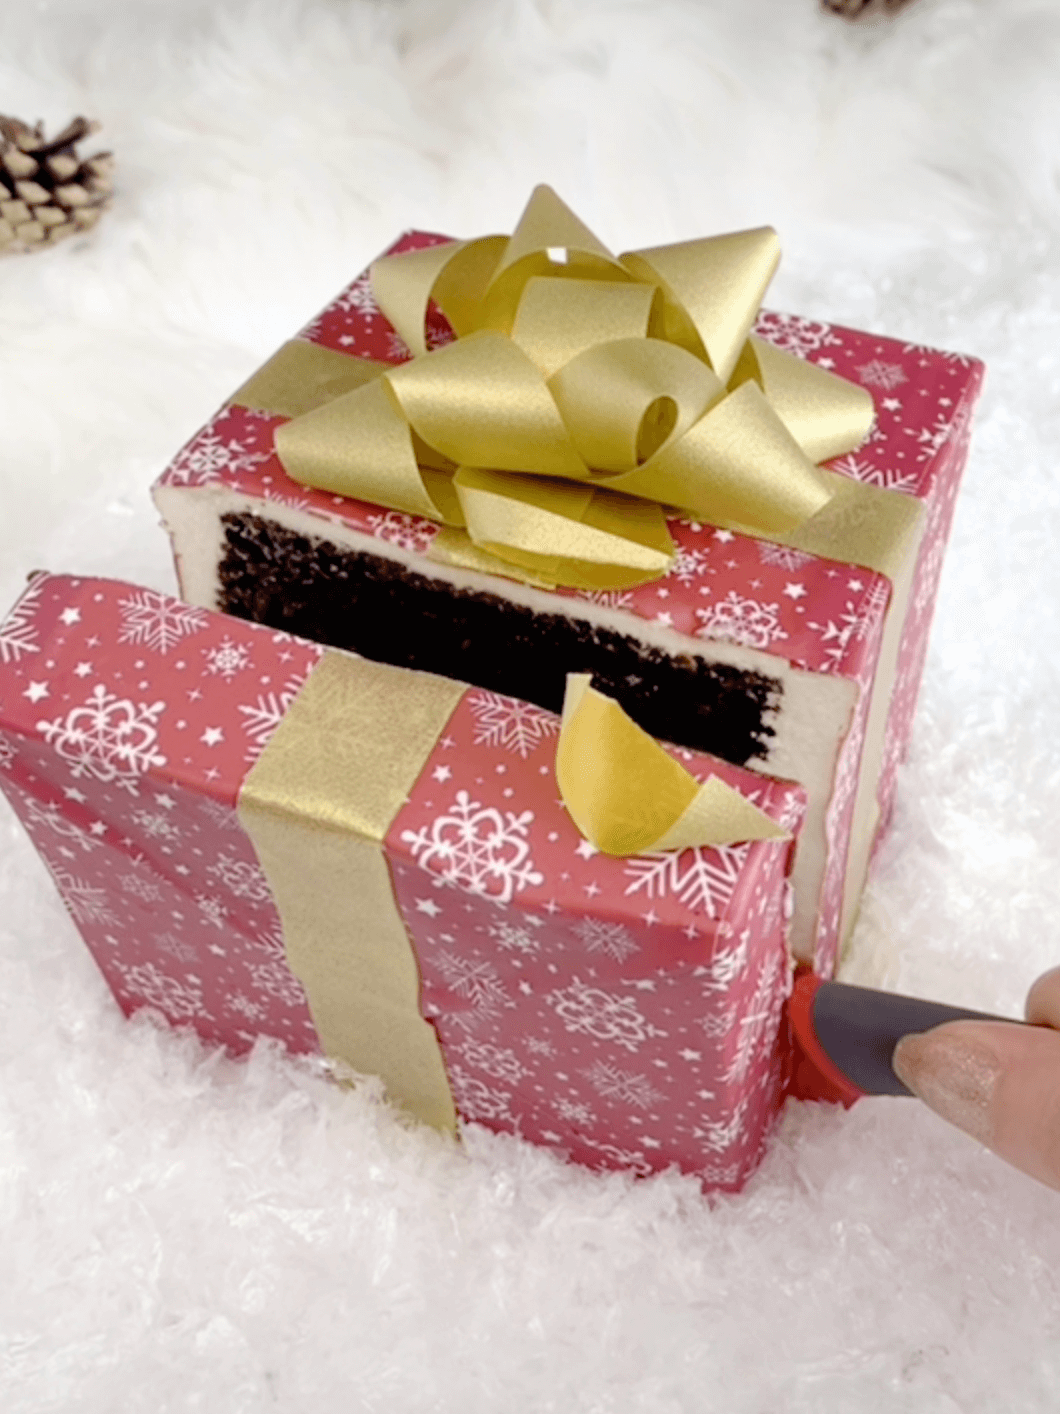 “Gift Box“ Cake With Pamela from Buttercut Bakery.